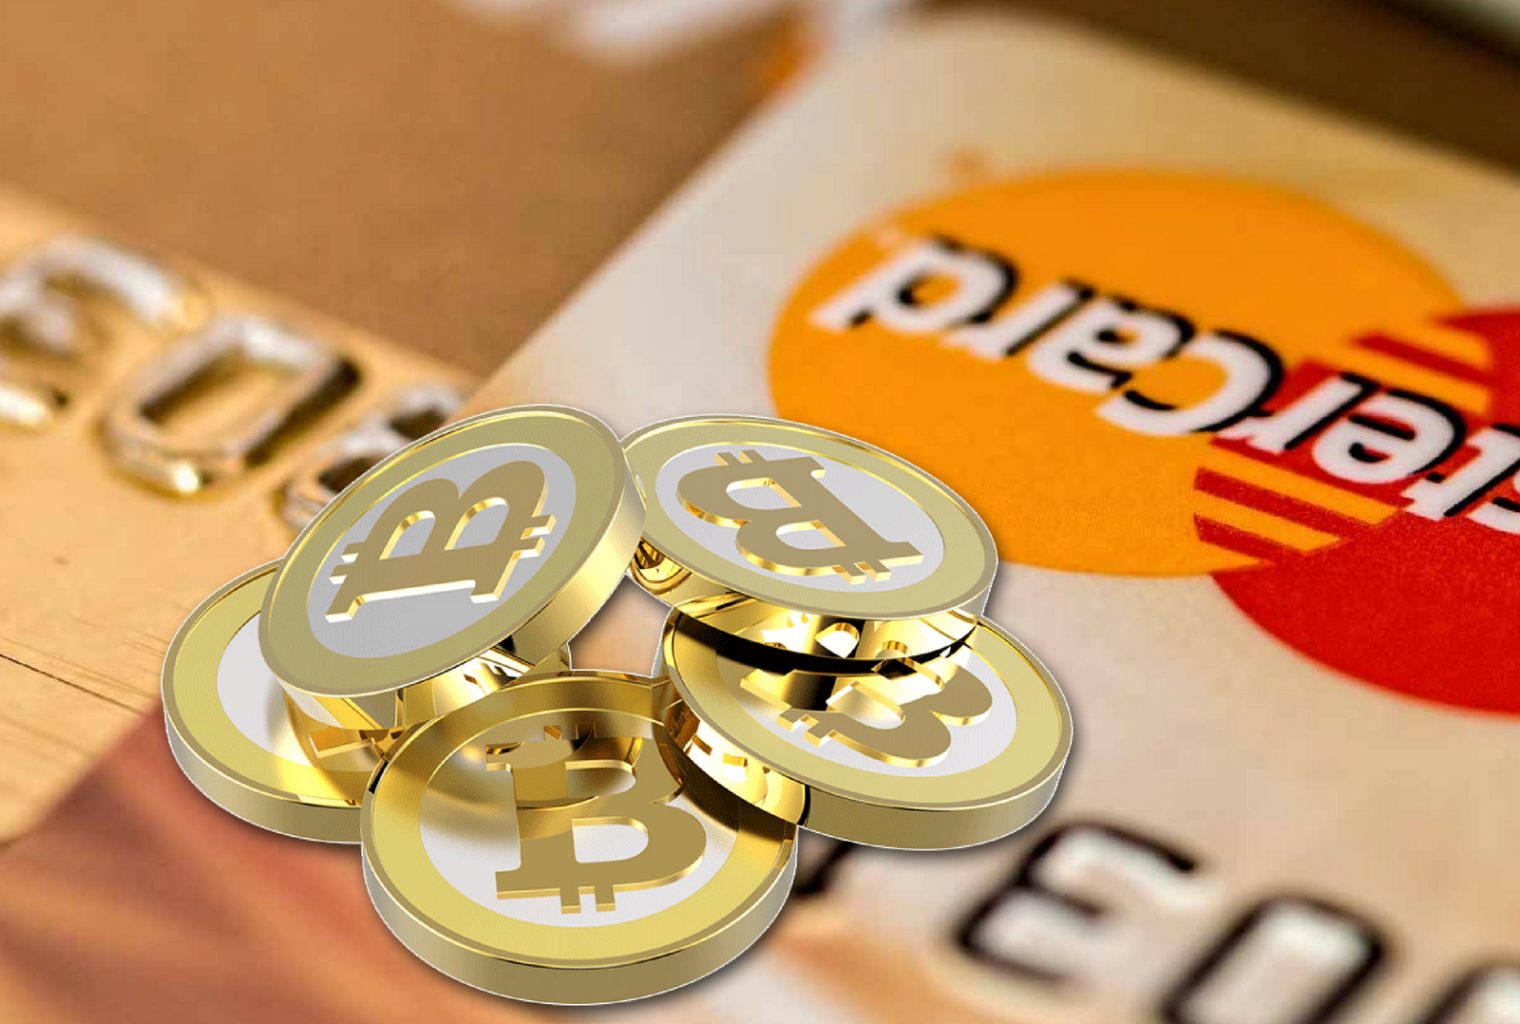 Satoshi Nakamoto Bitcoin Article Using Credit Cards To Buy Bitcoin - 